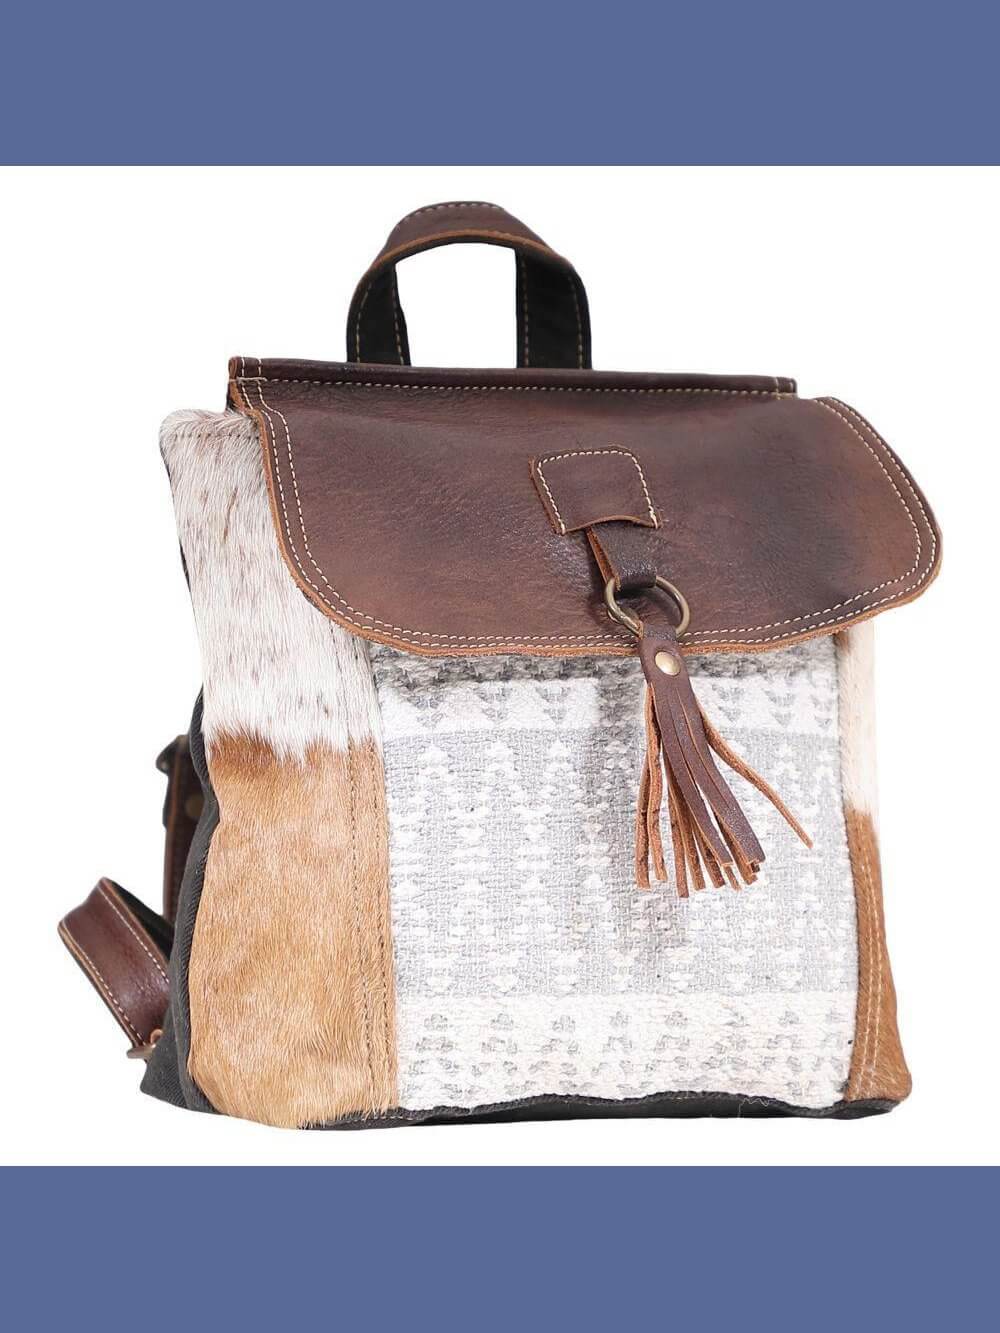 Kasey Leigh Boutique || Myra Bag - Hanging Buckle Backpack
$50.00